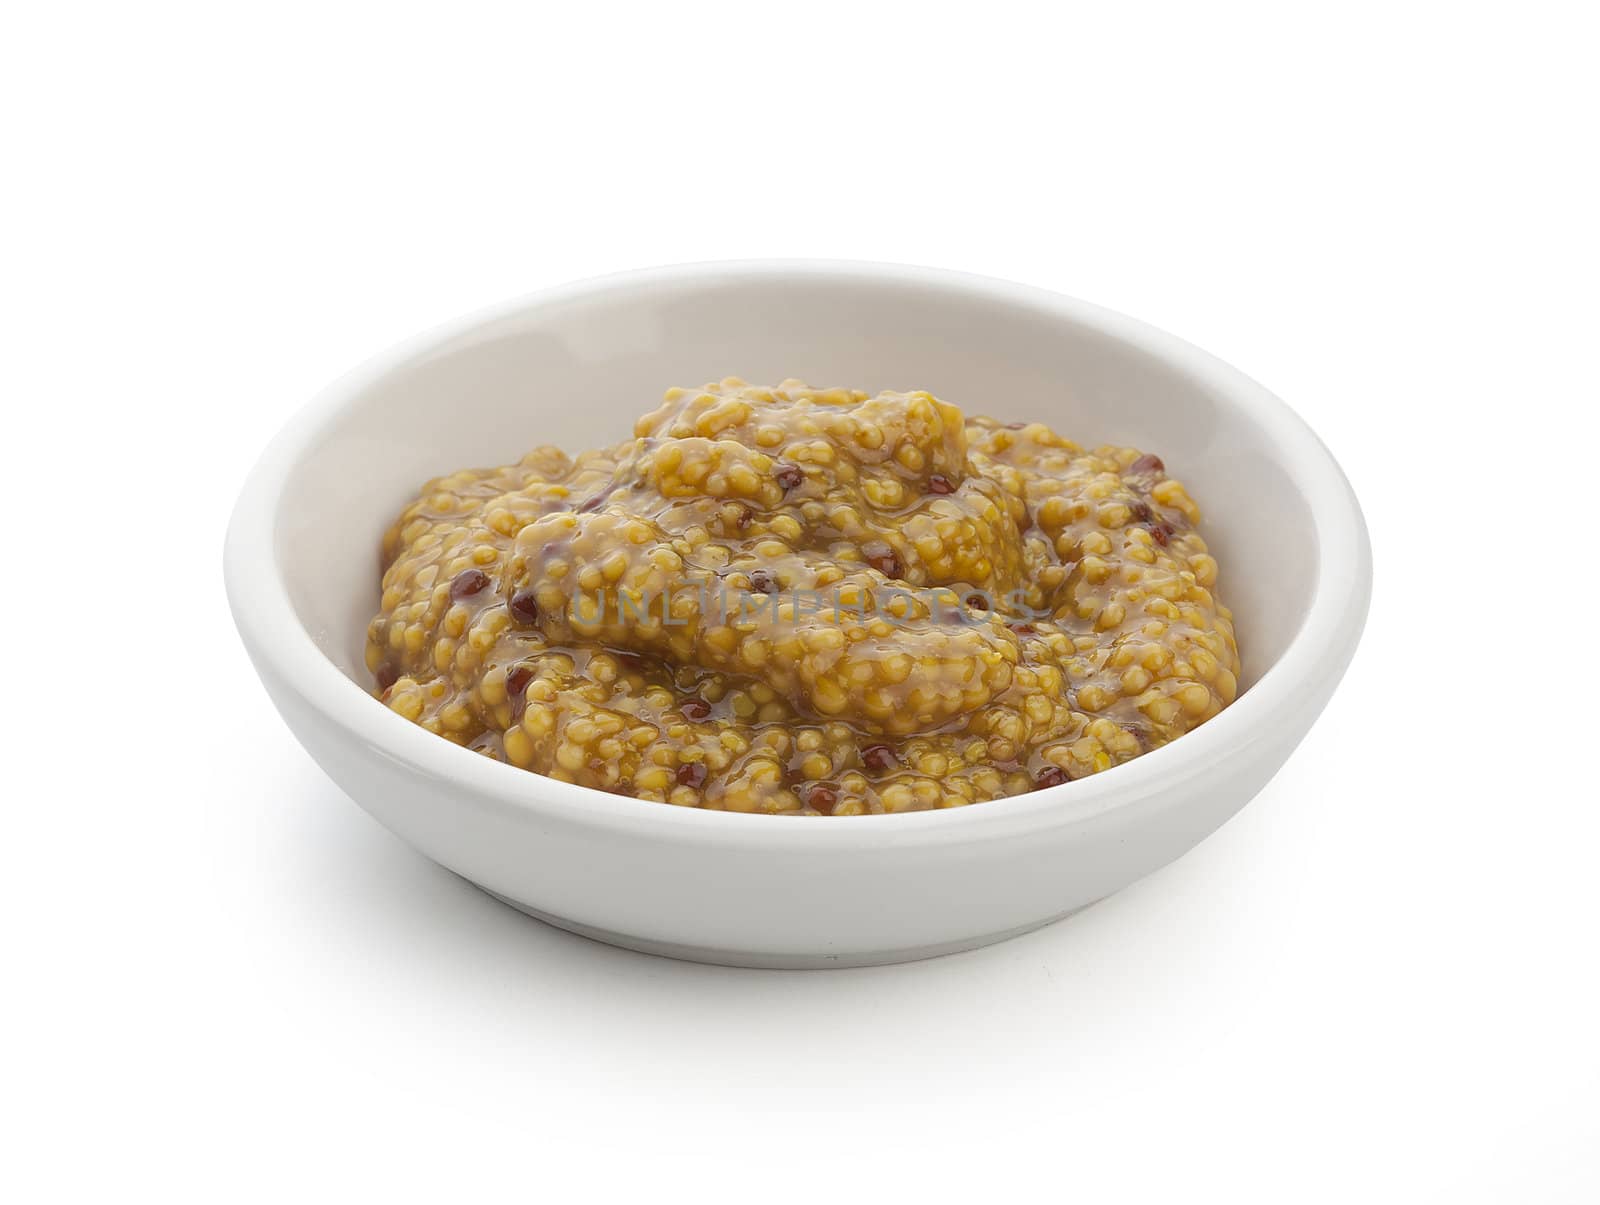 Grainy mustard by Angorius